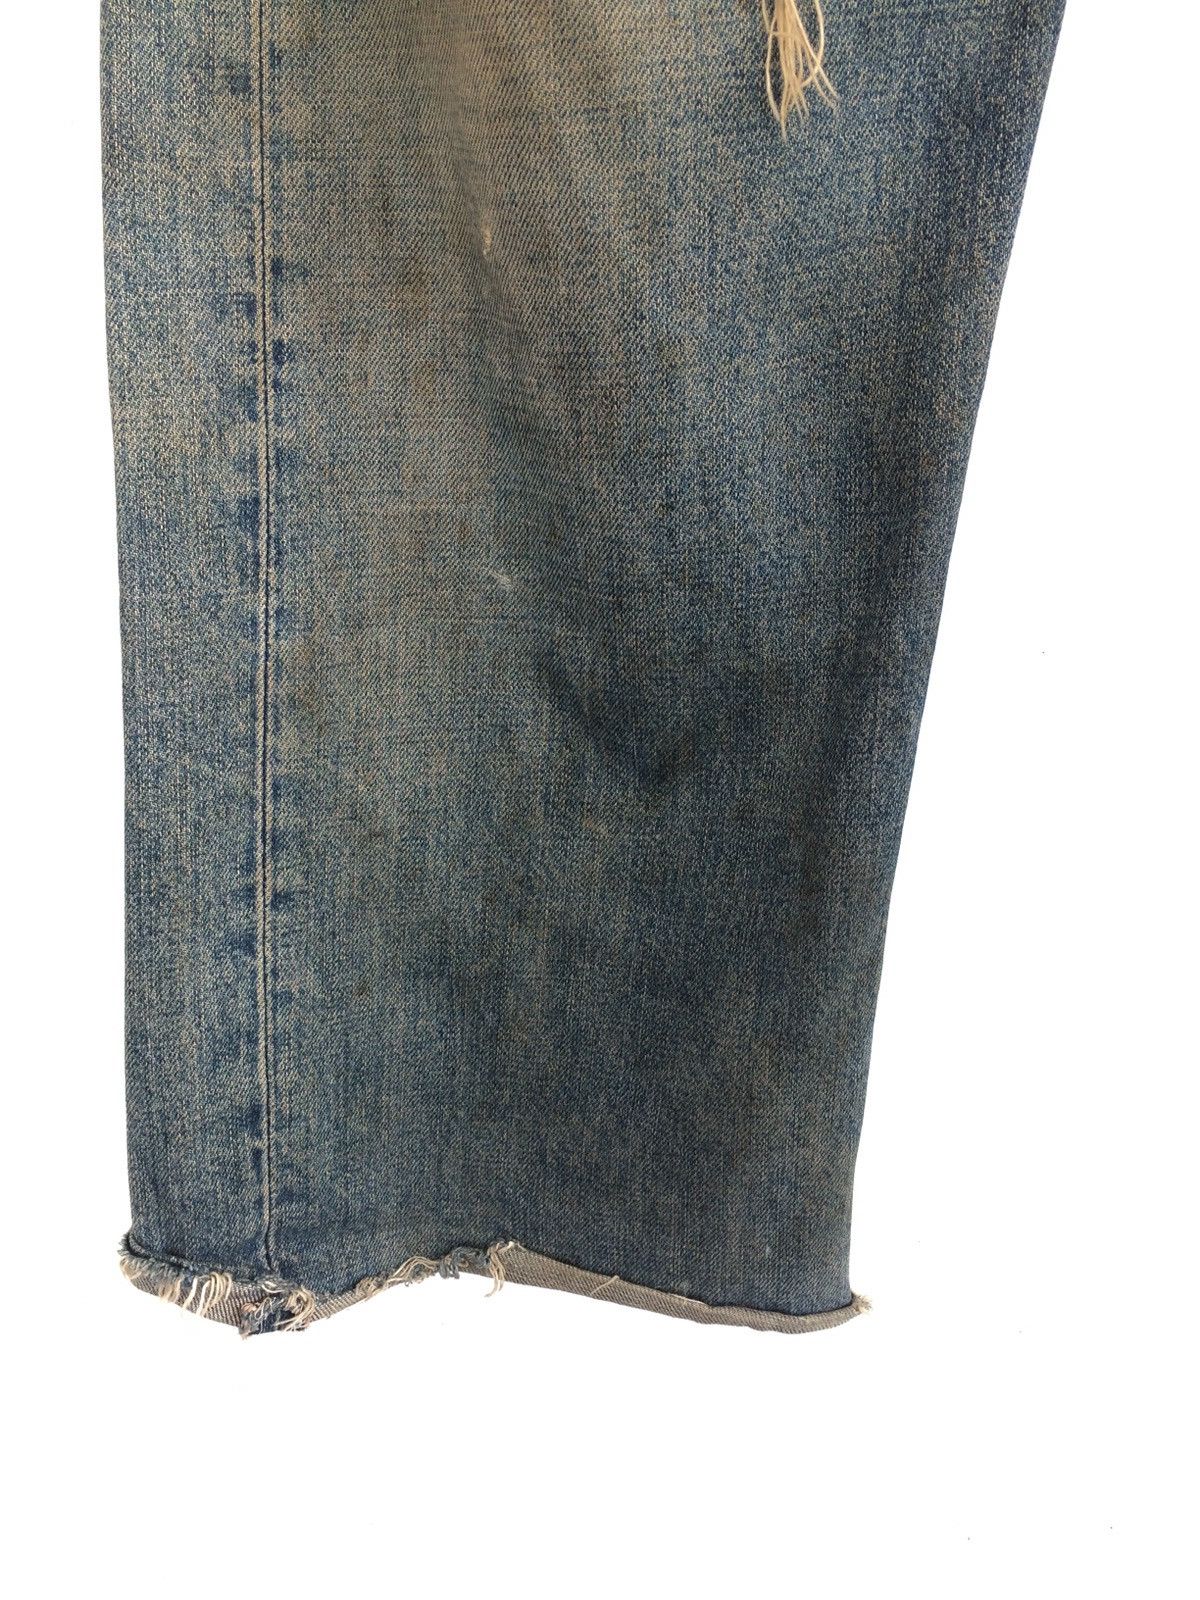 Vintage Levis Distressed Kurt Cobain Fashion Style Denim Pant Size US 31 - 5 Thumbnail